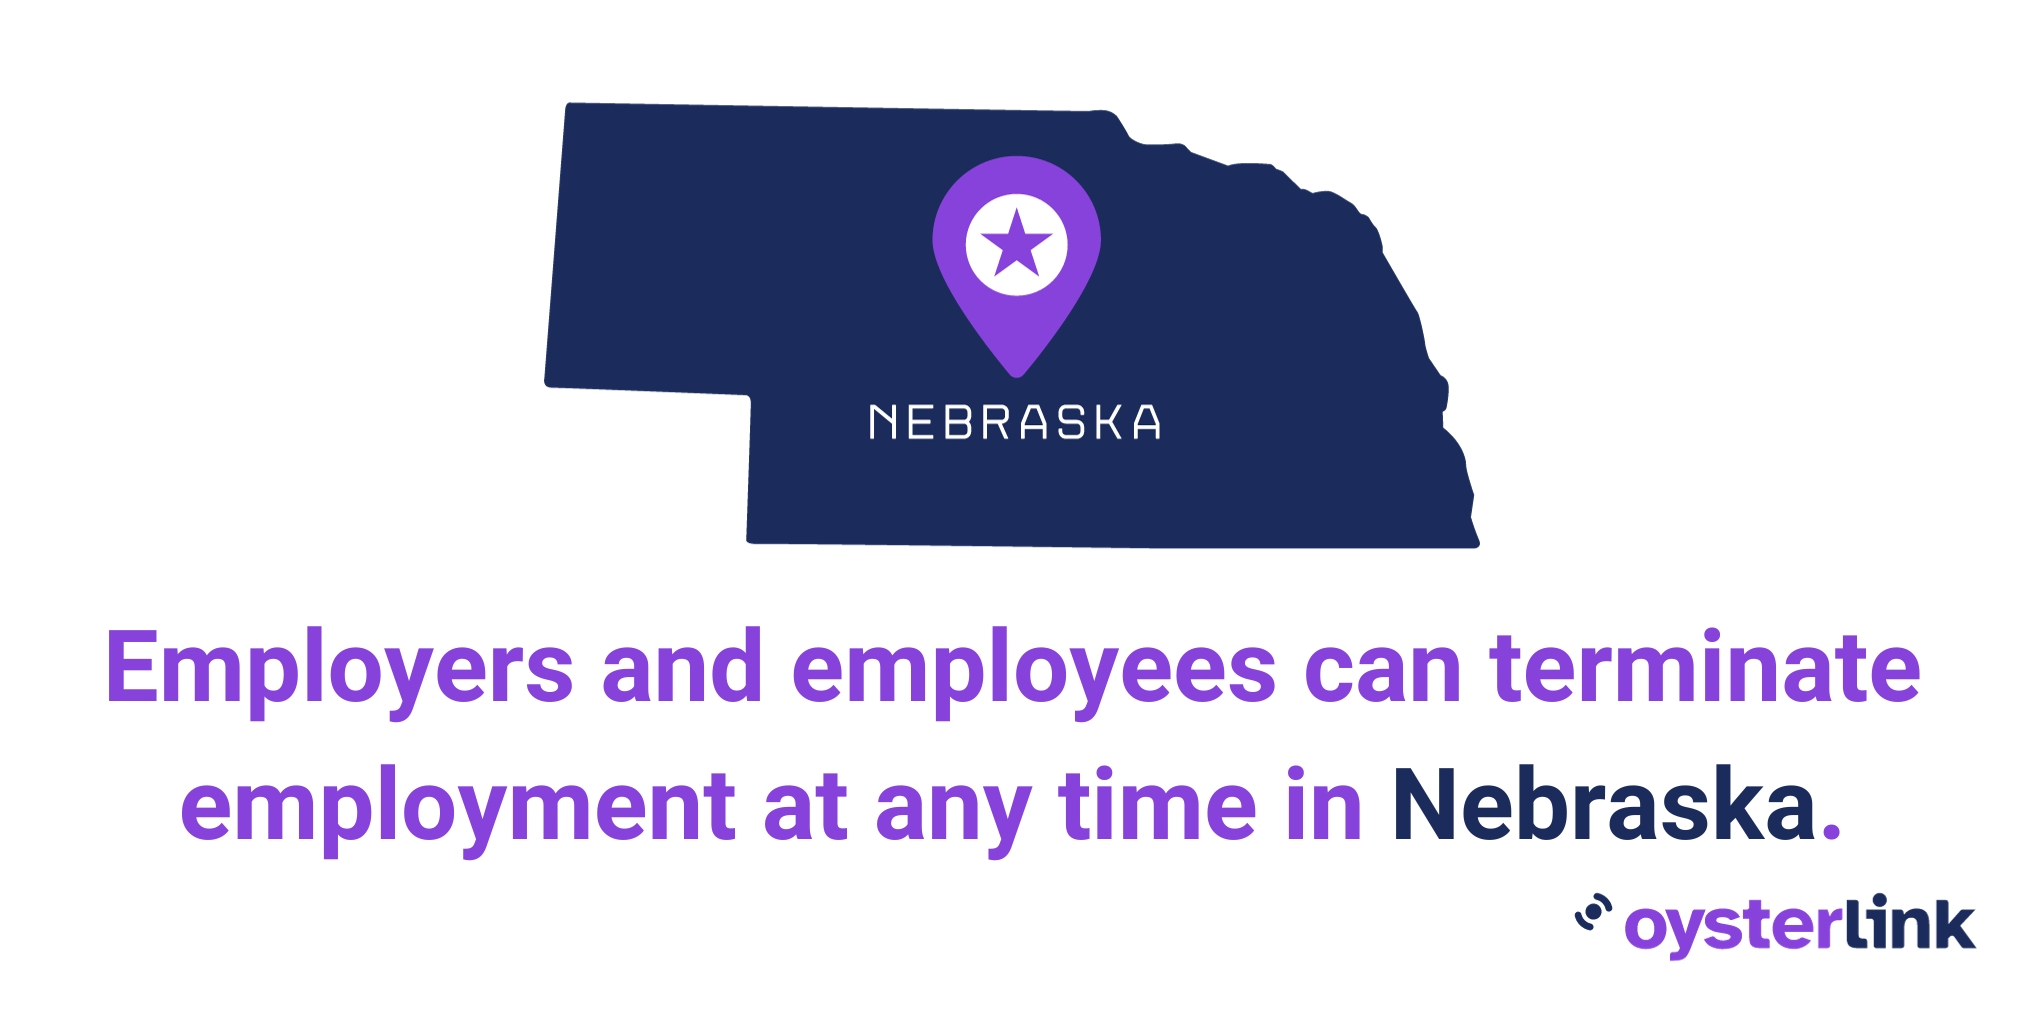 Nebraska follows at-will employment